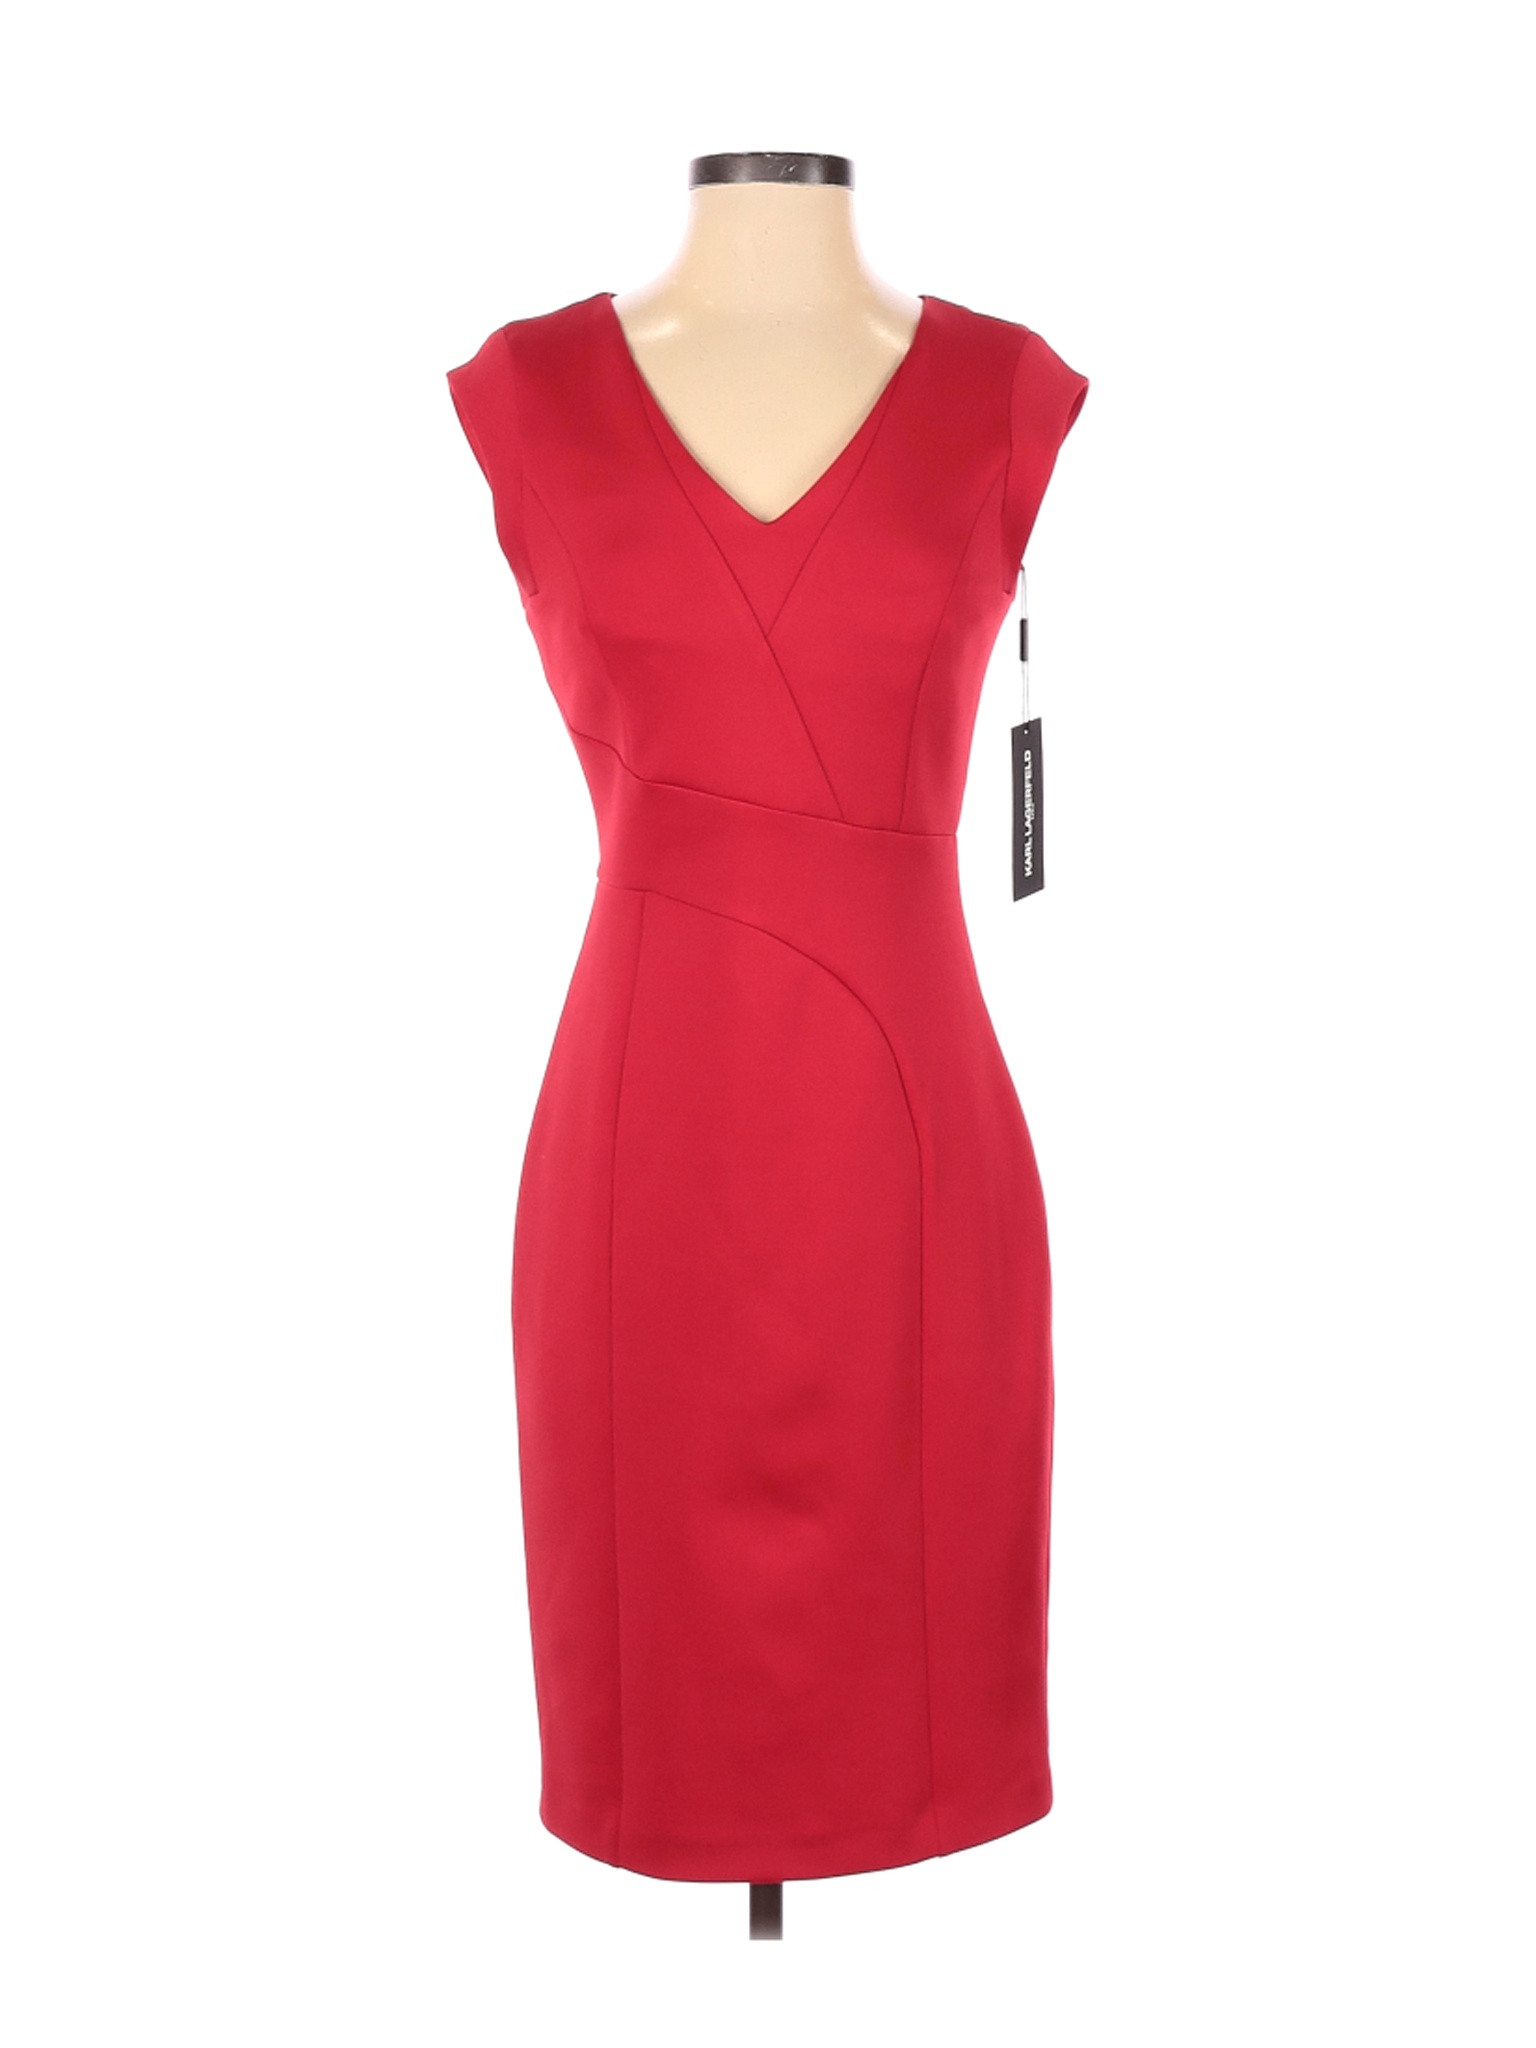 NWT Karl Lagerfeld Paris Women Red Cocktail Dress 2 | eBay